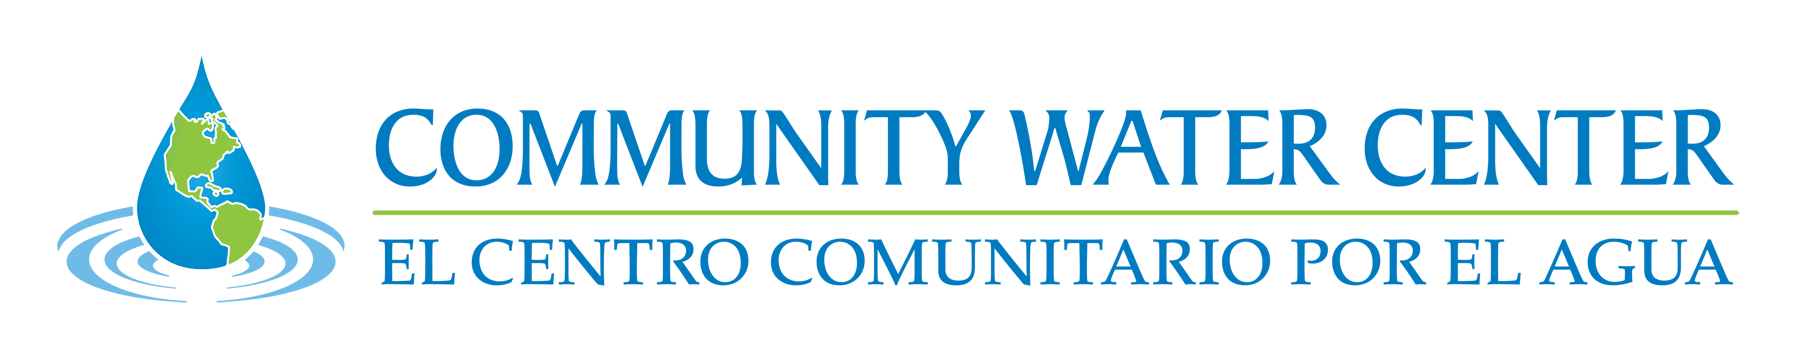 Community Water Center logo 